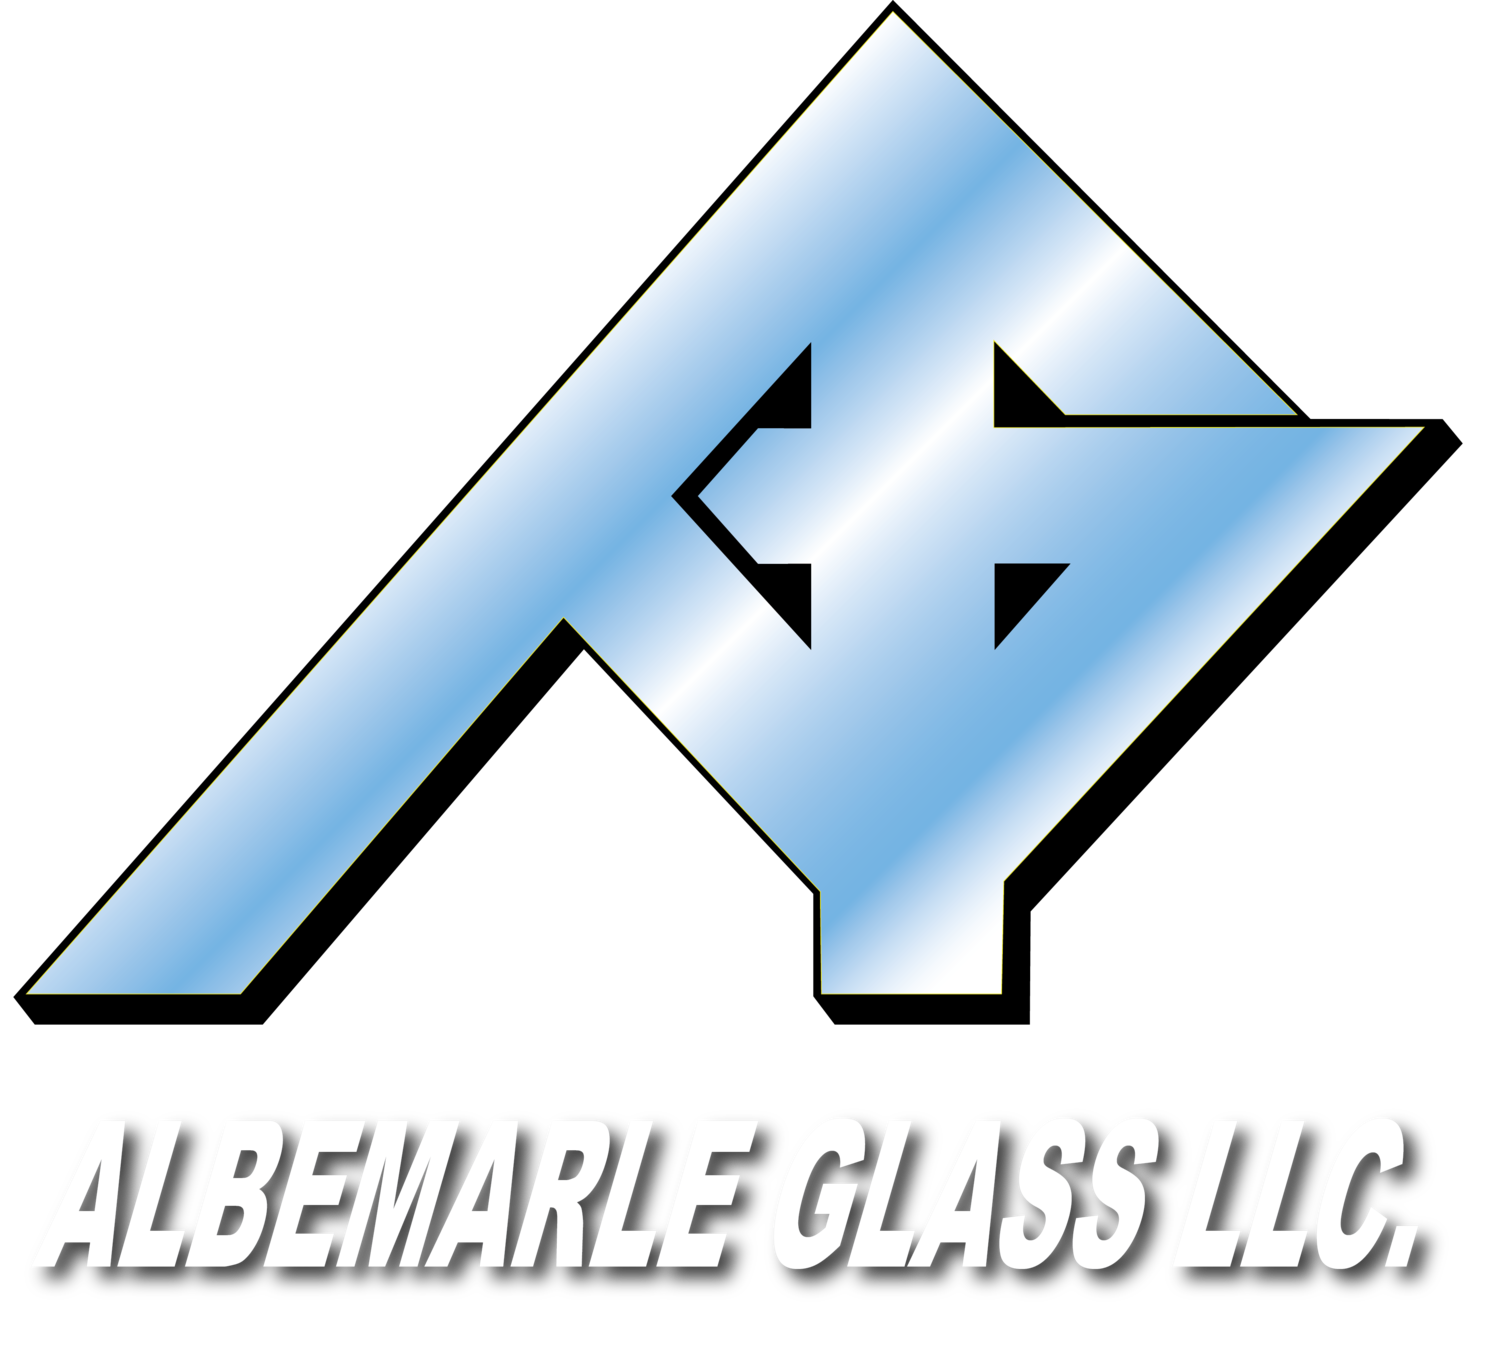 Albemarle Glass LLC